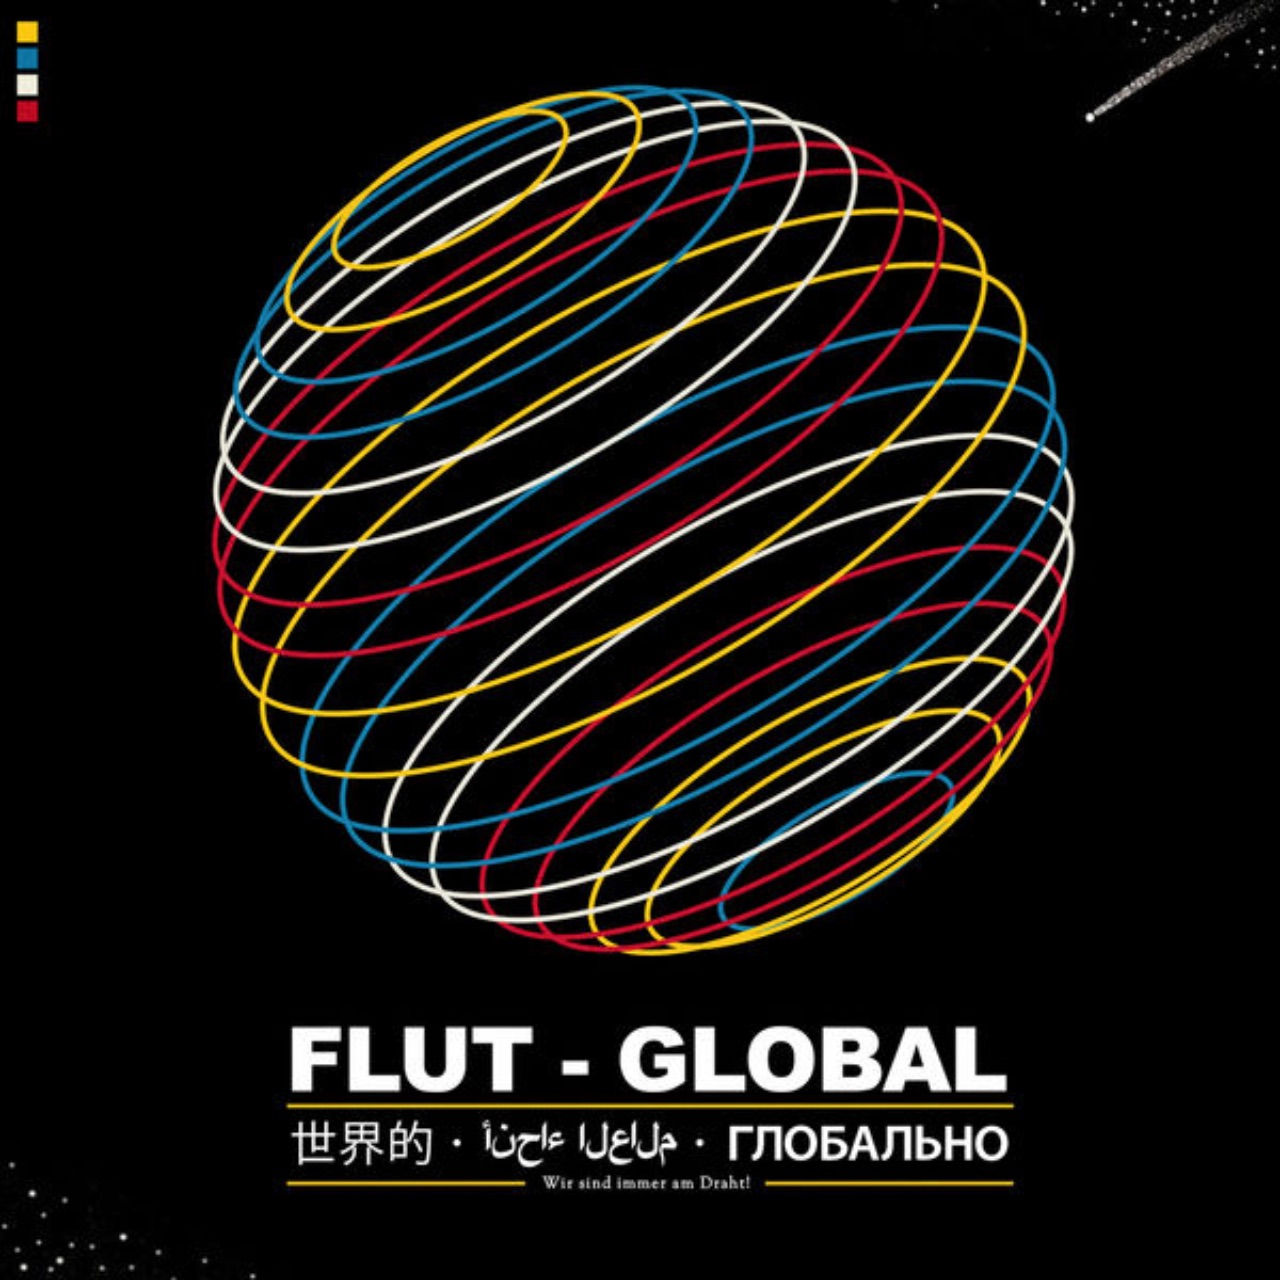 Albumcover "Global" von Flut